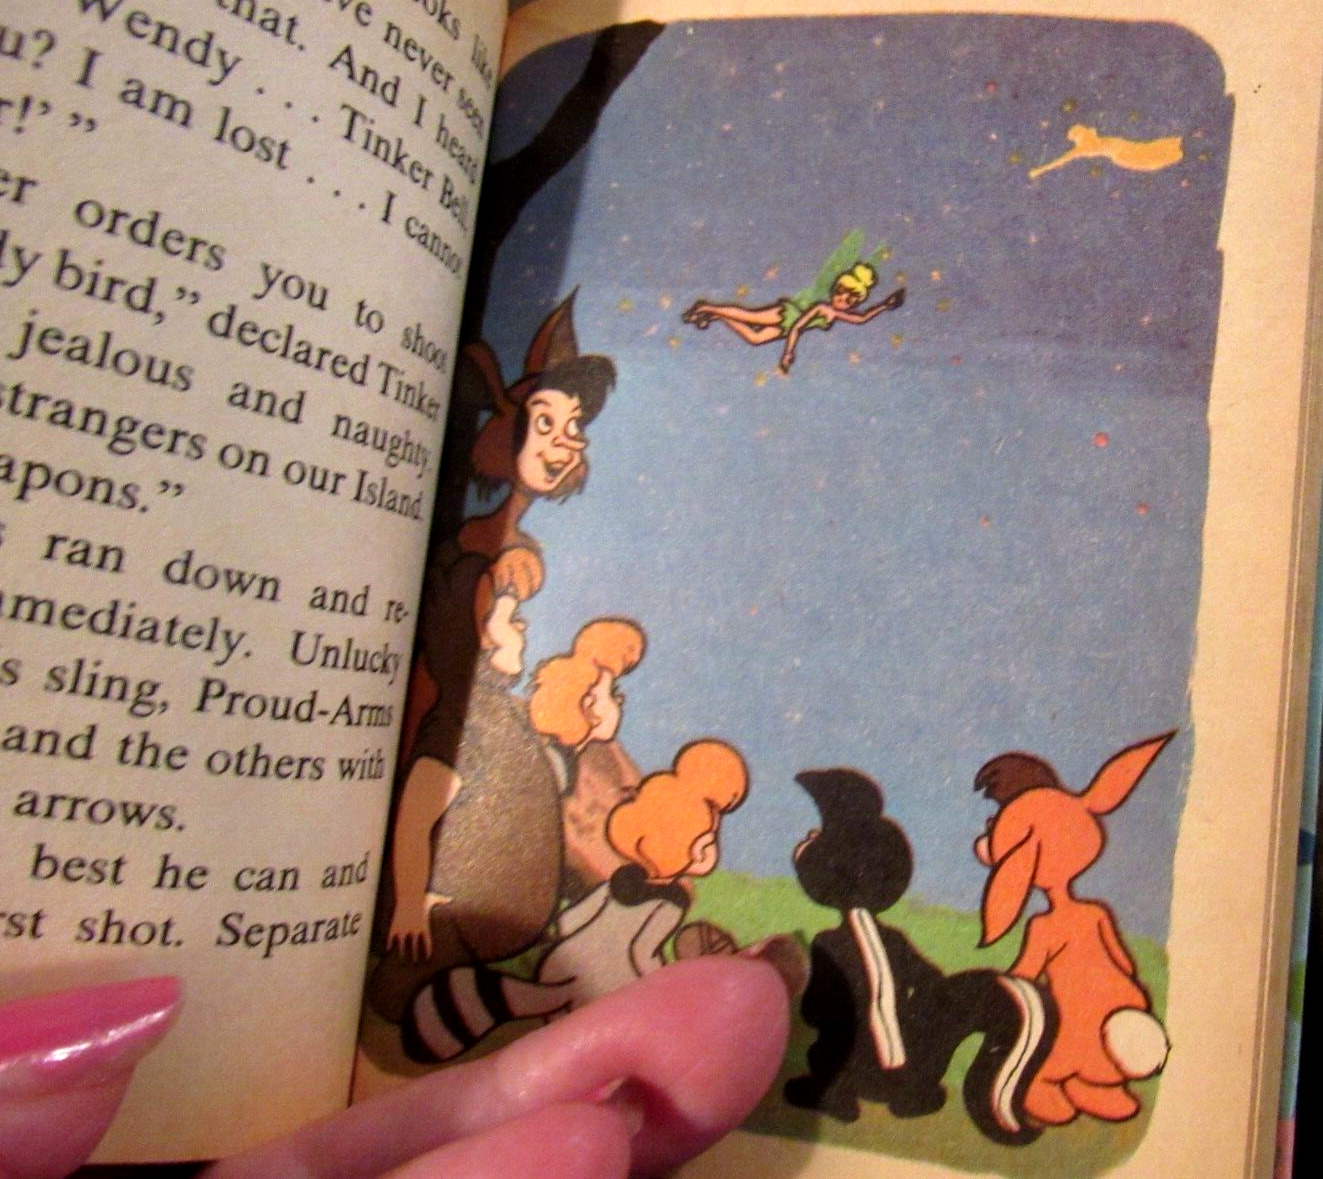 From Walt Disney Movie   Peter Pan, 1967 Pictures By W.disney Studio. 245pg Book